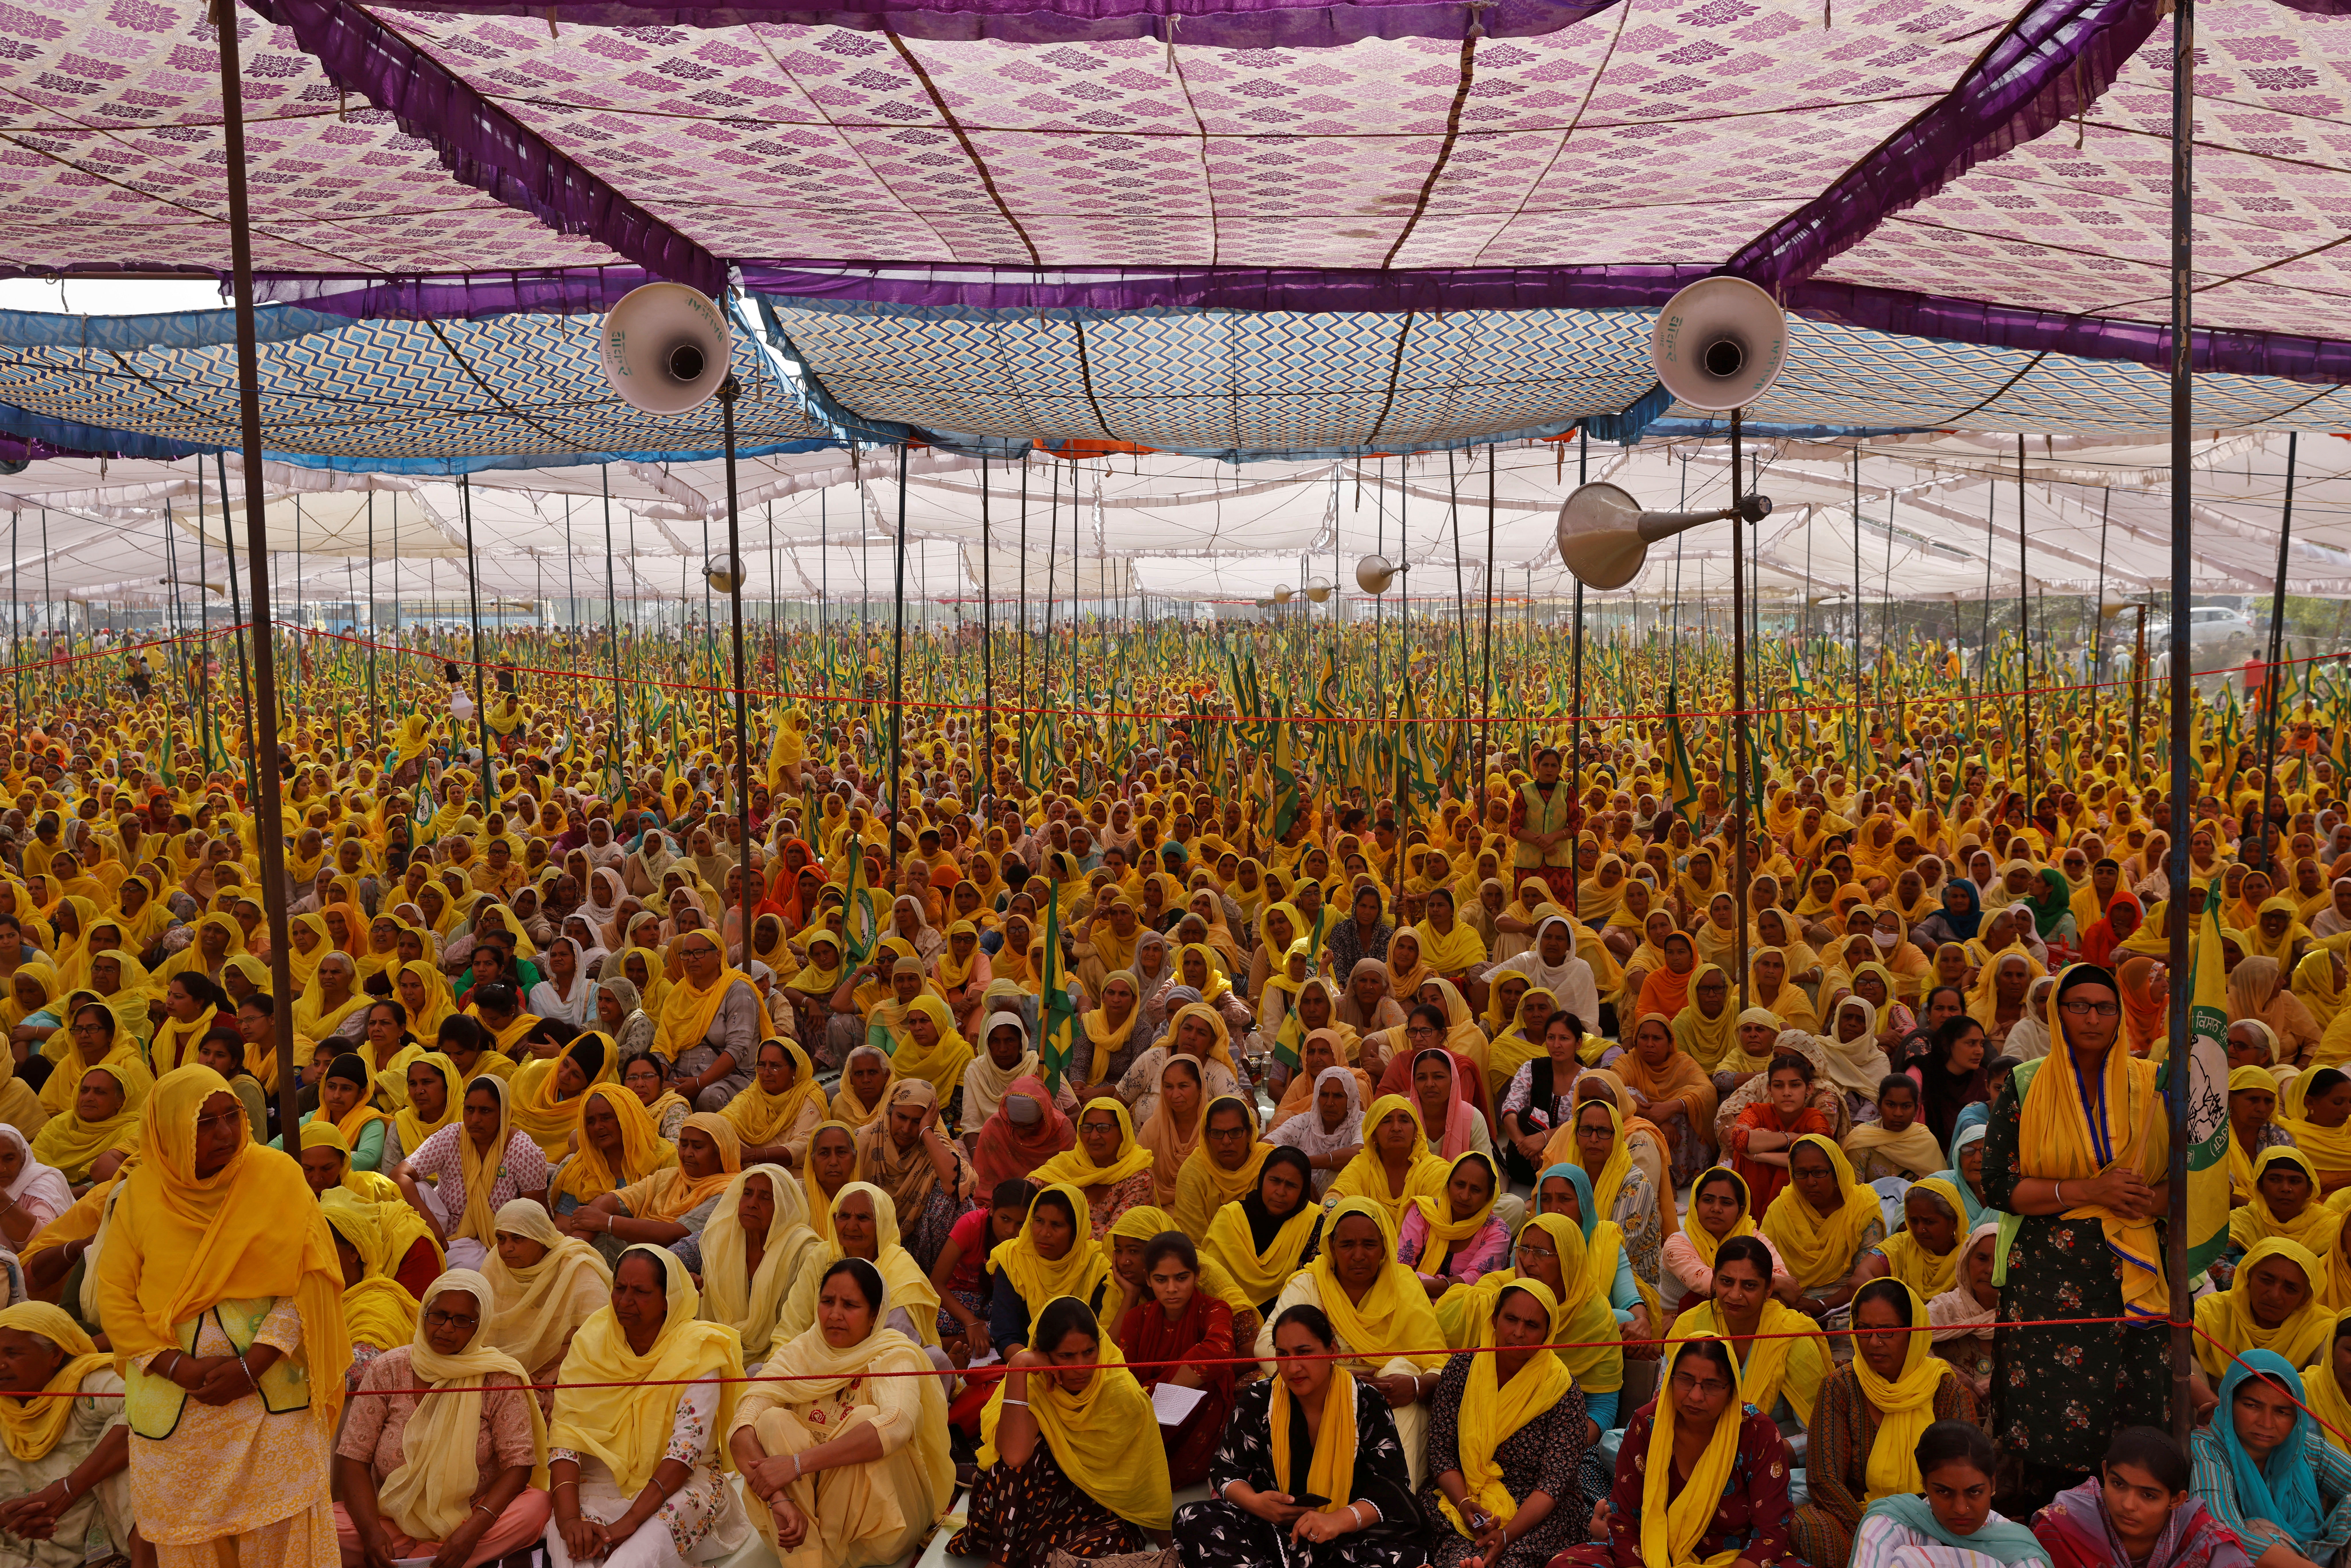 Women farmers attend a protest against farm laws on the occasion of International Women's Day at Bahadurgar near Haryana-Delhi border, India, March 8, 2021. REUTERS/Danish Siddiqui